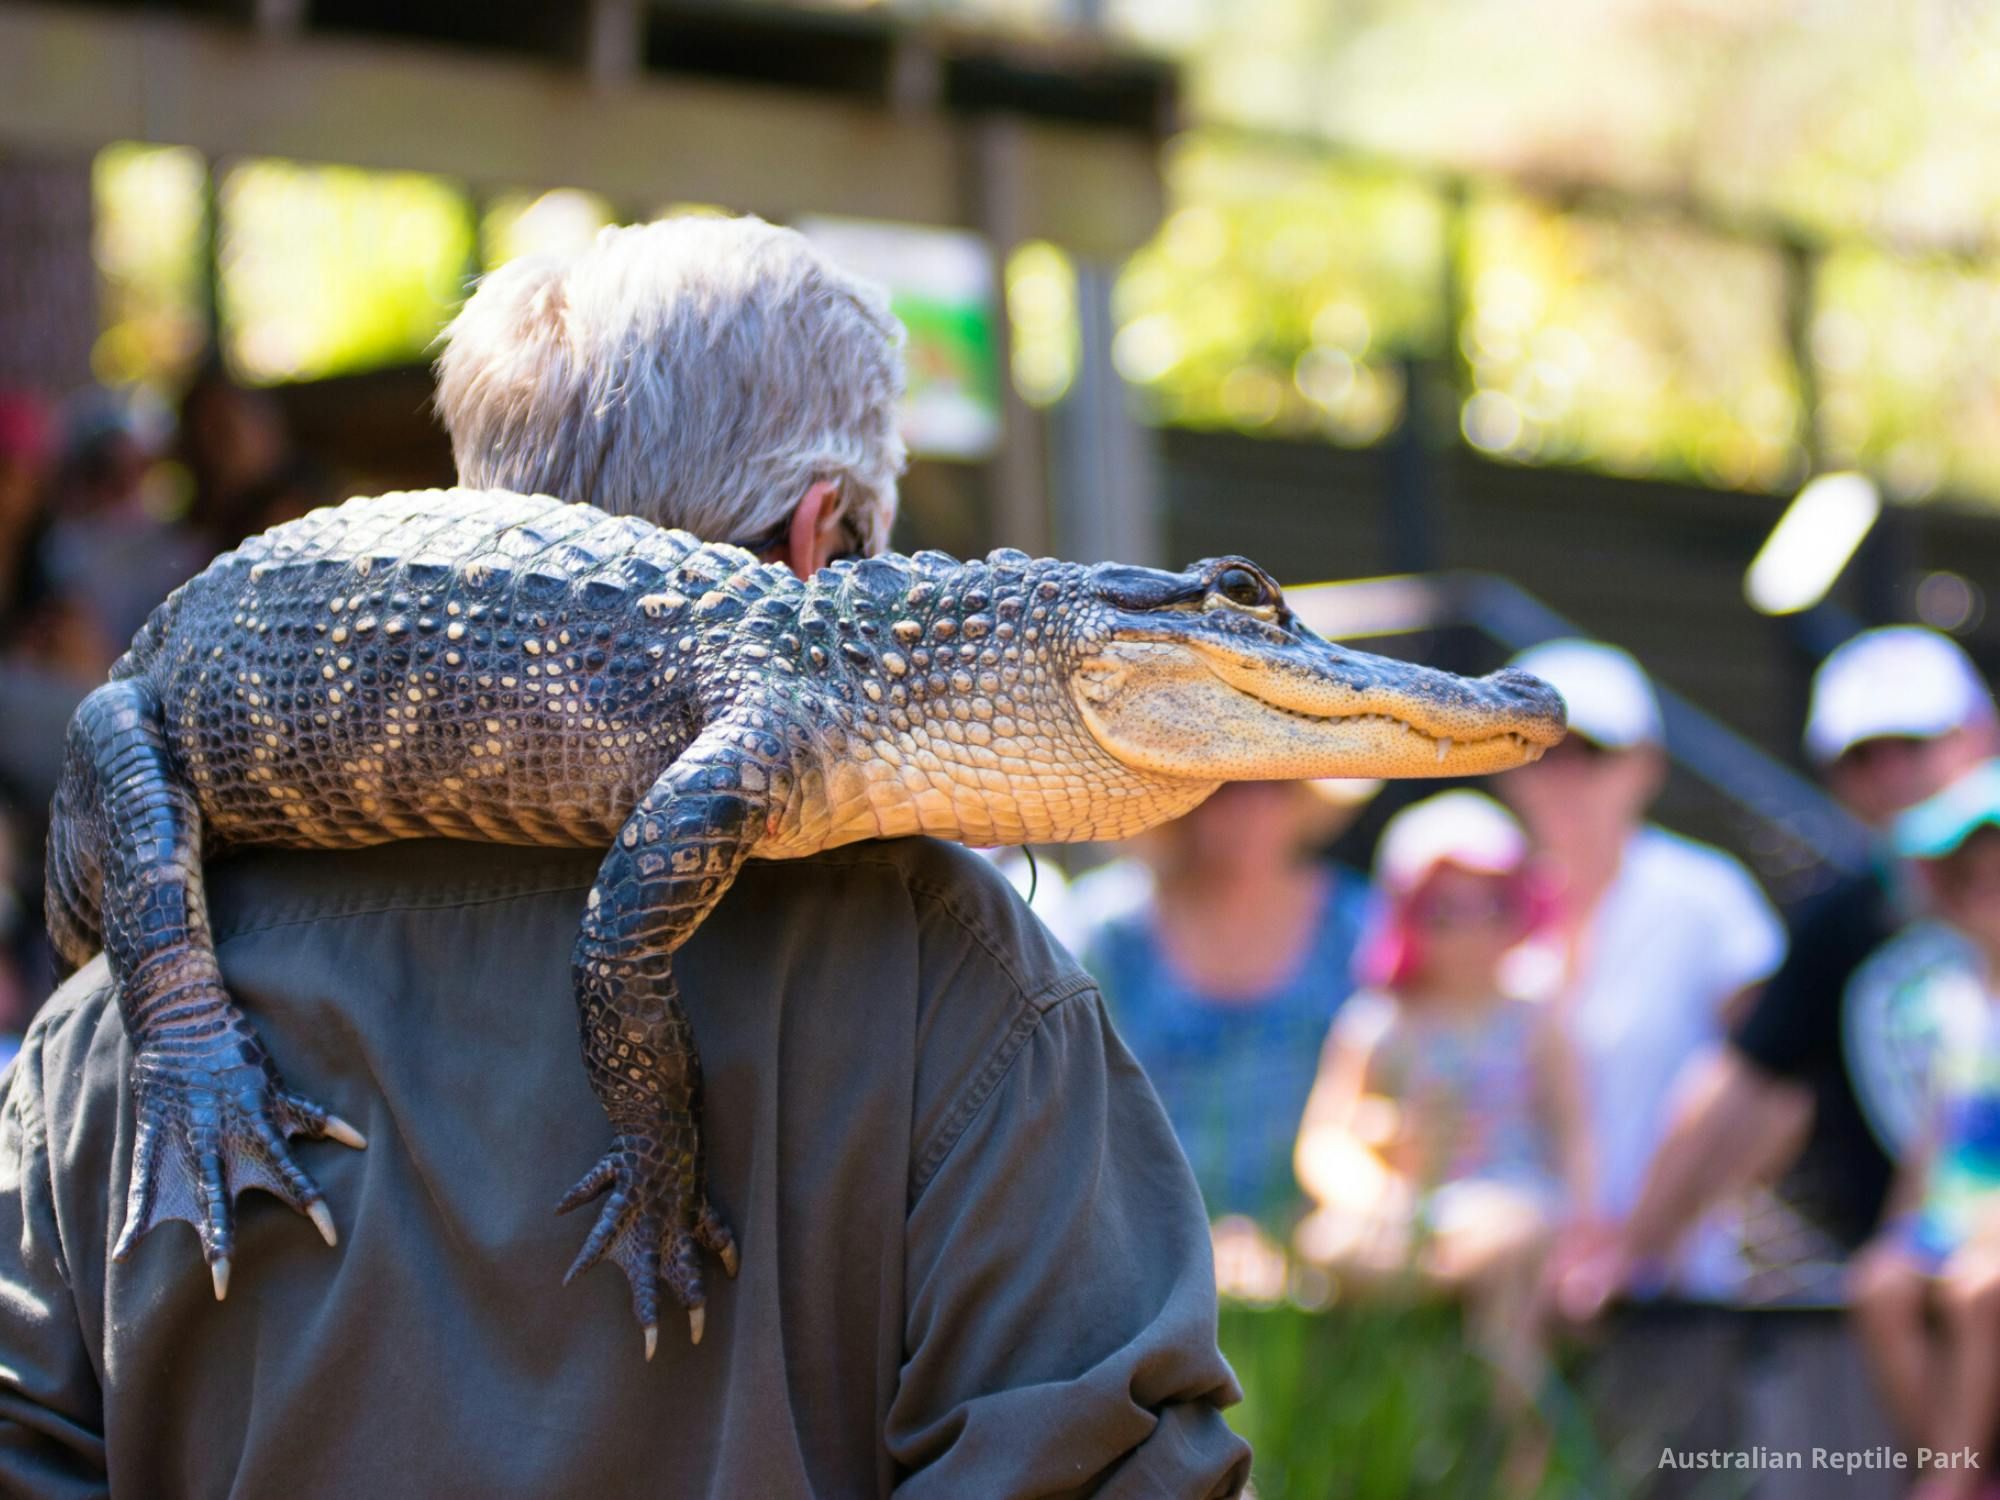 Imagen del tour: Parque de reptiles australiano